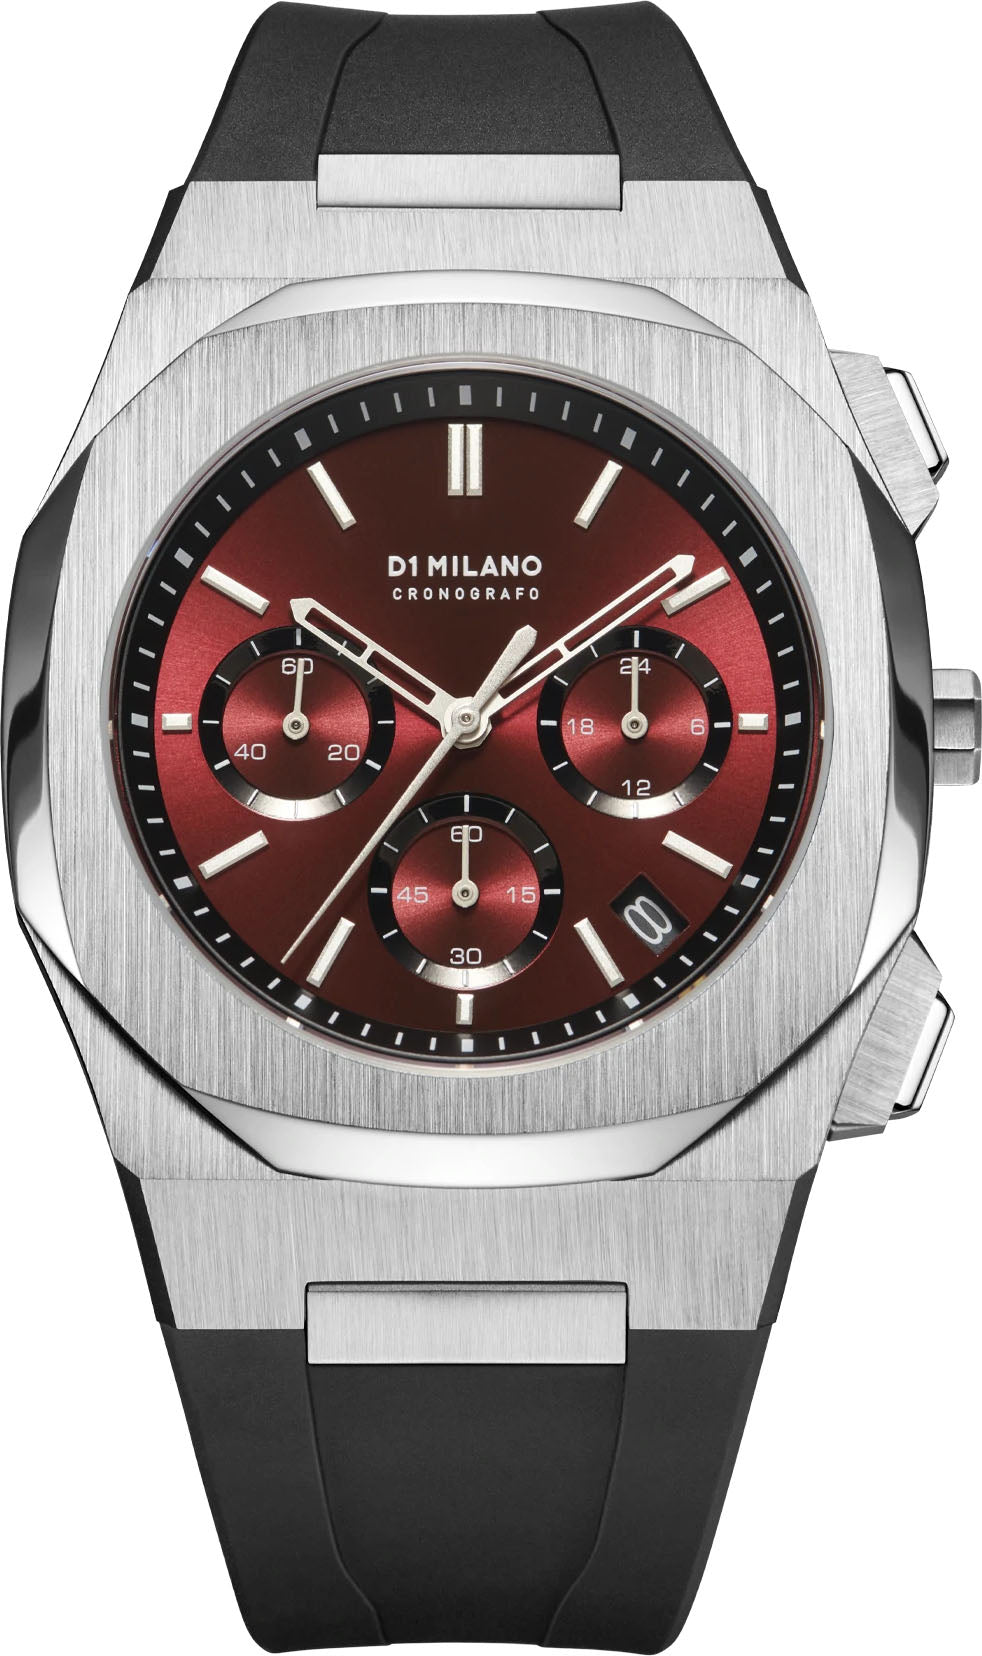 Photos - Wrist Watch Milano D1  Watch Cronografo Burgundy - Red DLM-110 